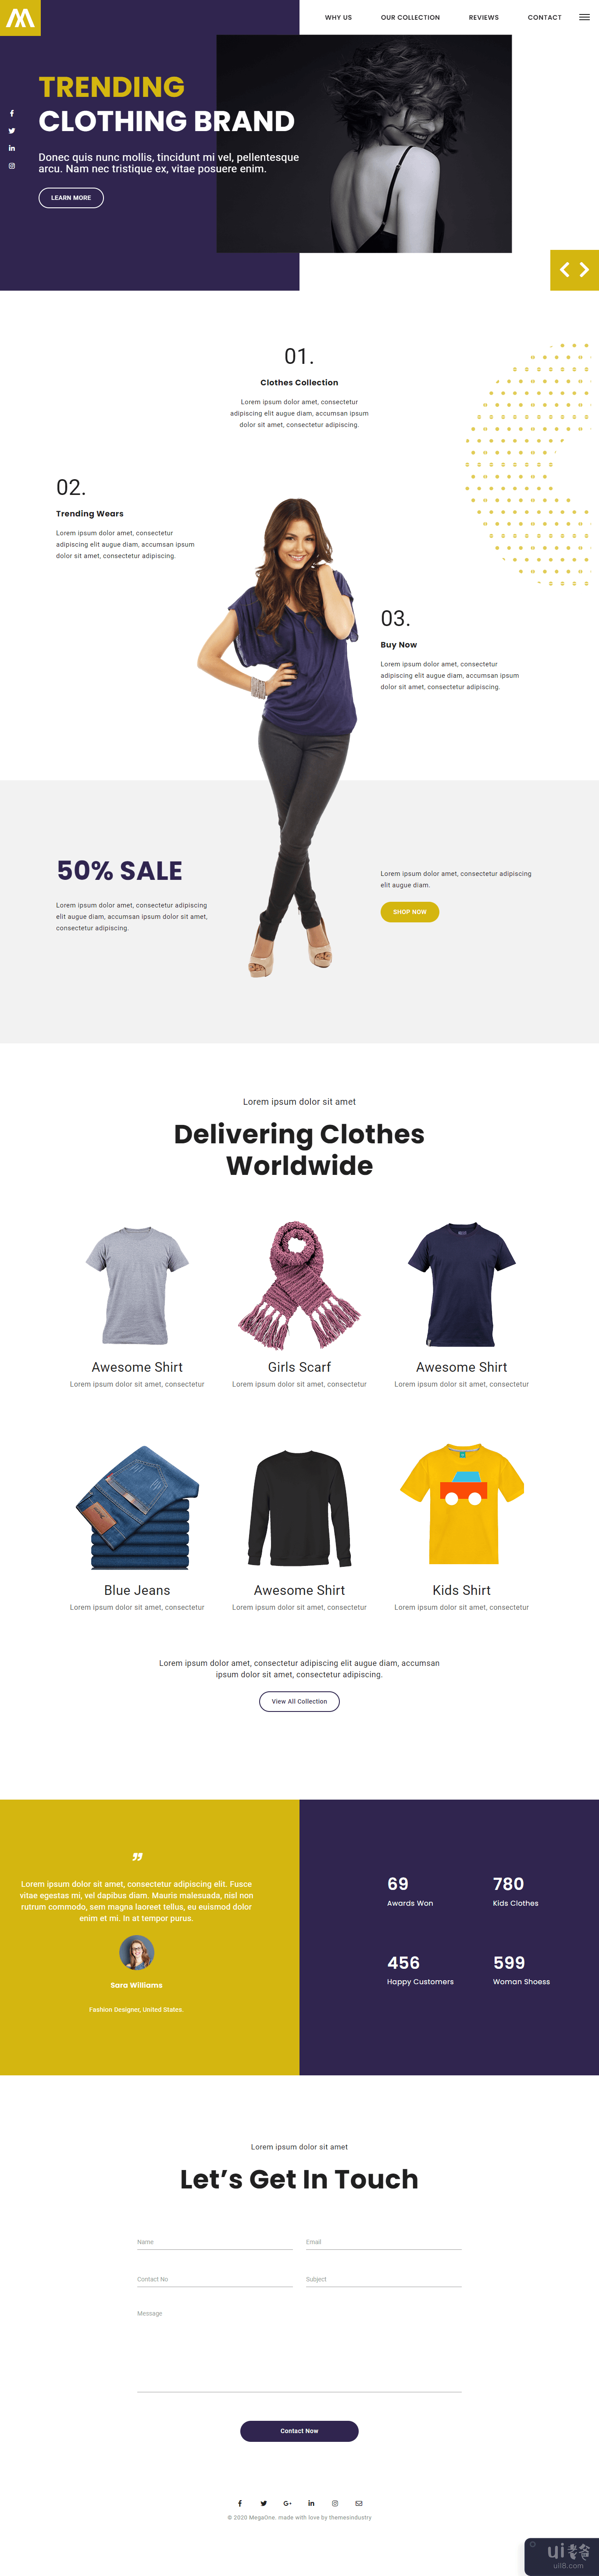 服装品牌HTML模板(Clothing Brand HTML Template)插图2